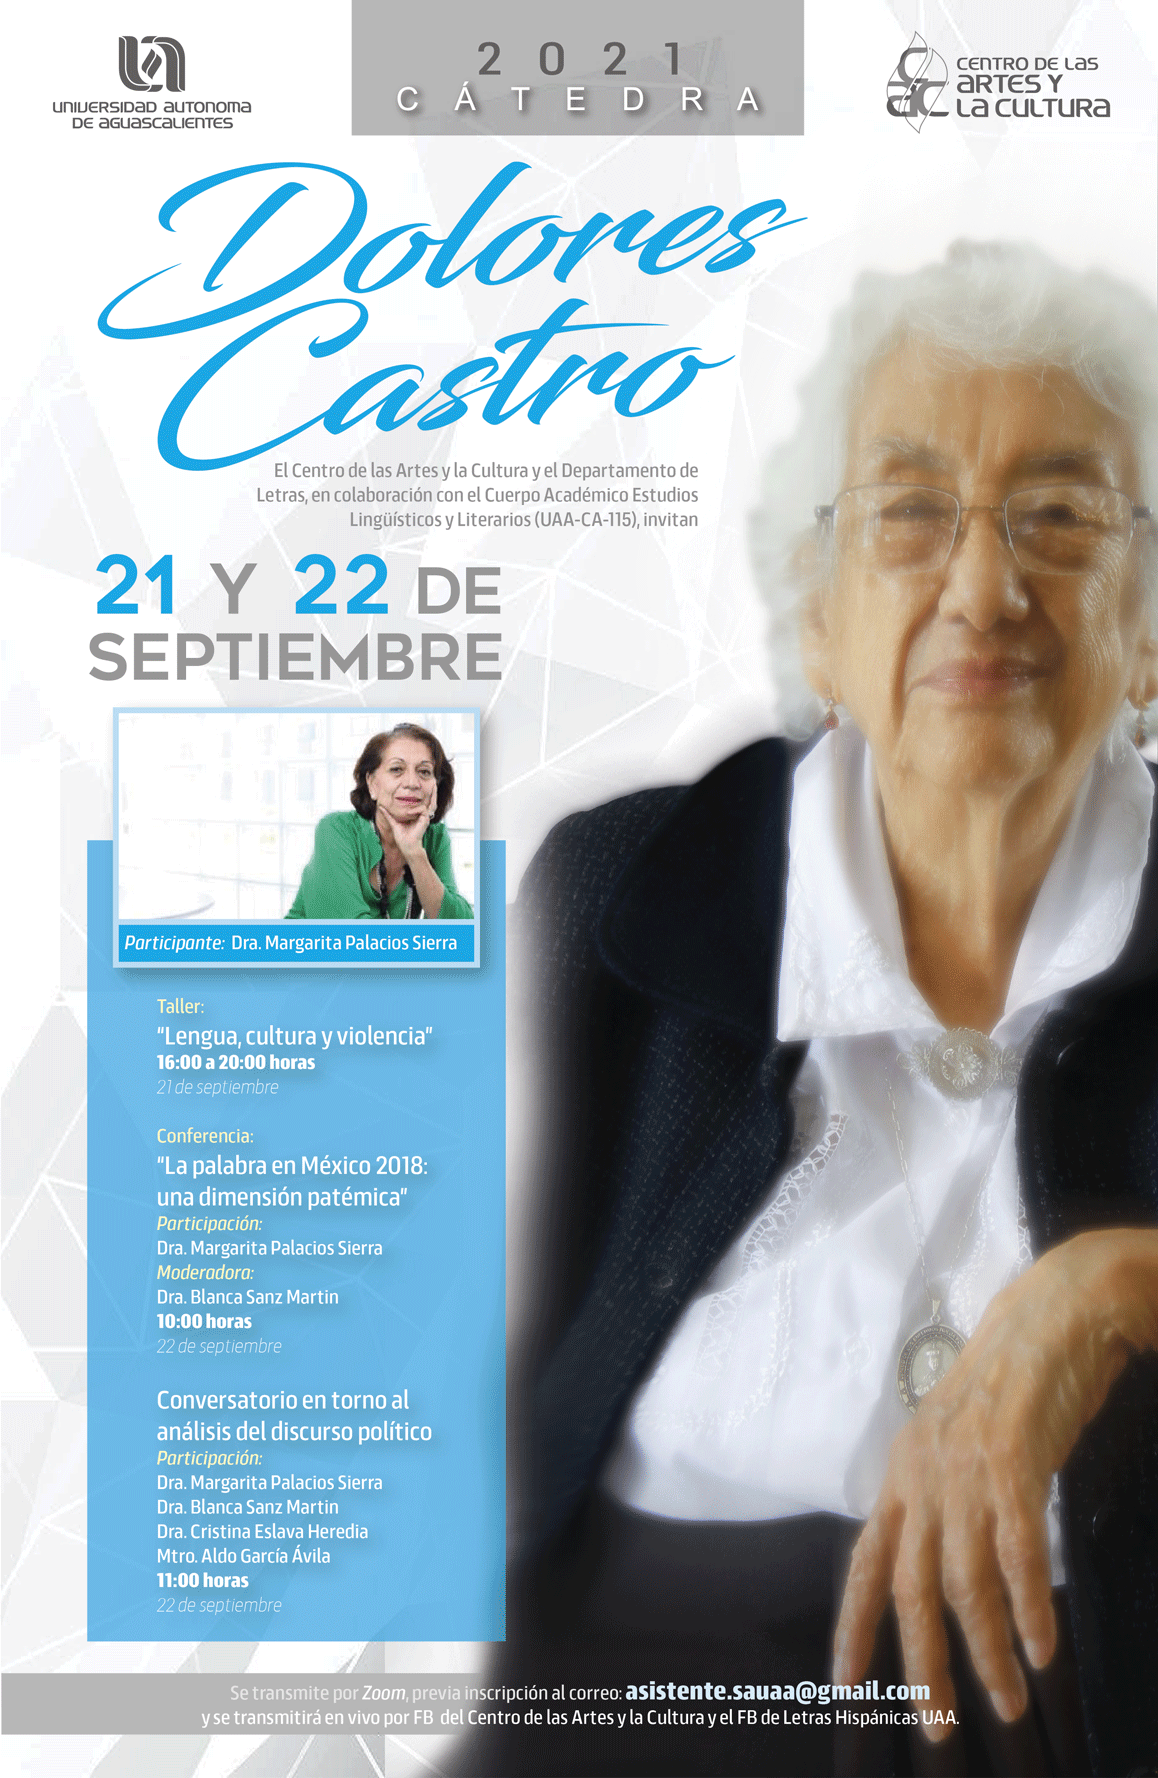 Cátedra Dolores Castro